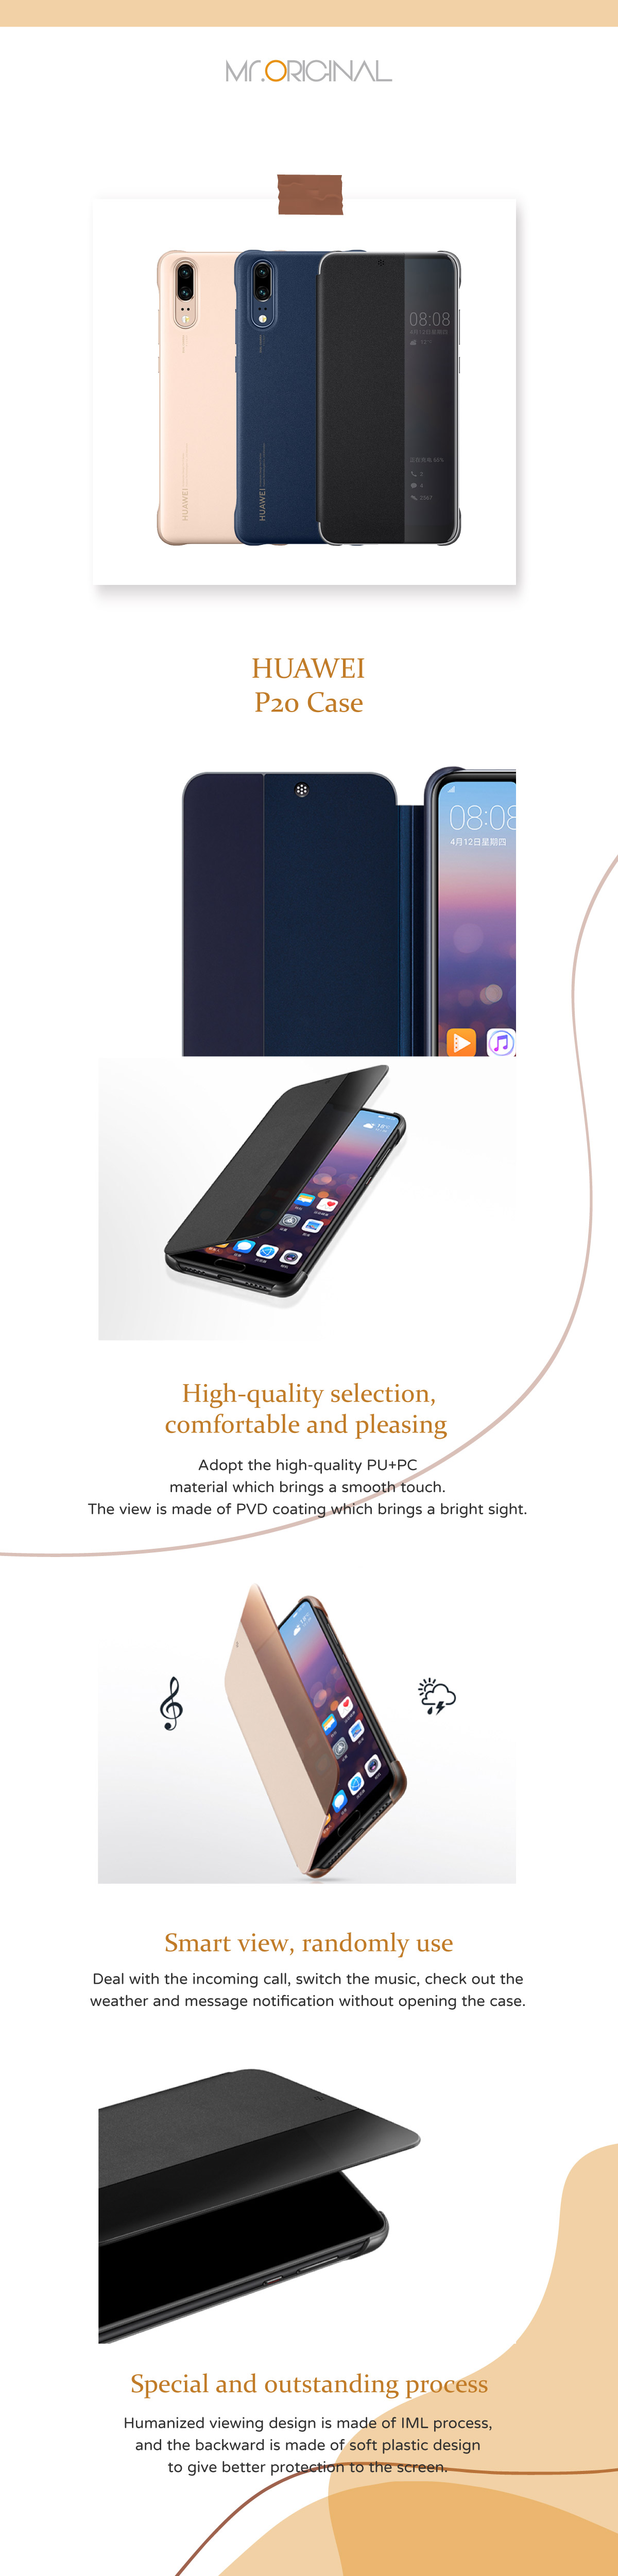 Funda abatible abatible de calidad original Huawei P20 pro Smart View PC +  PU 6.1